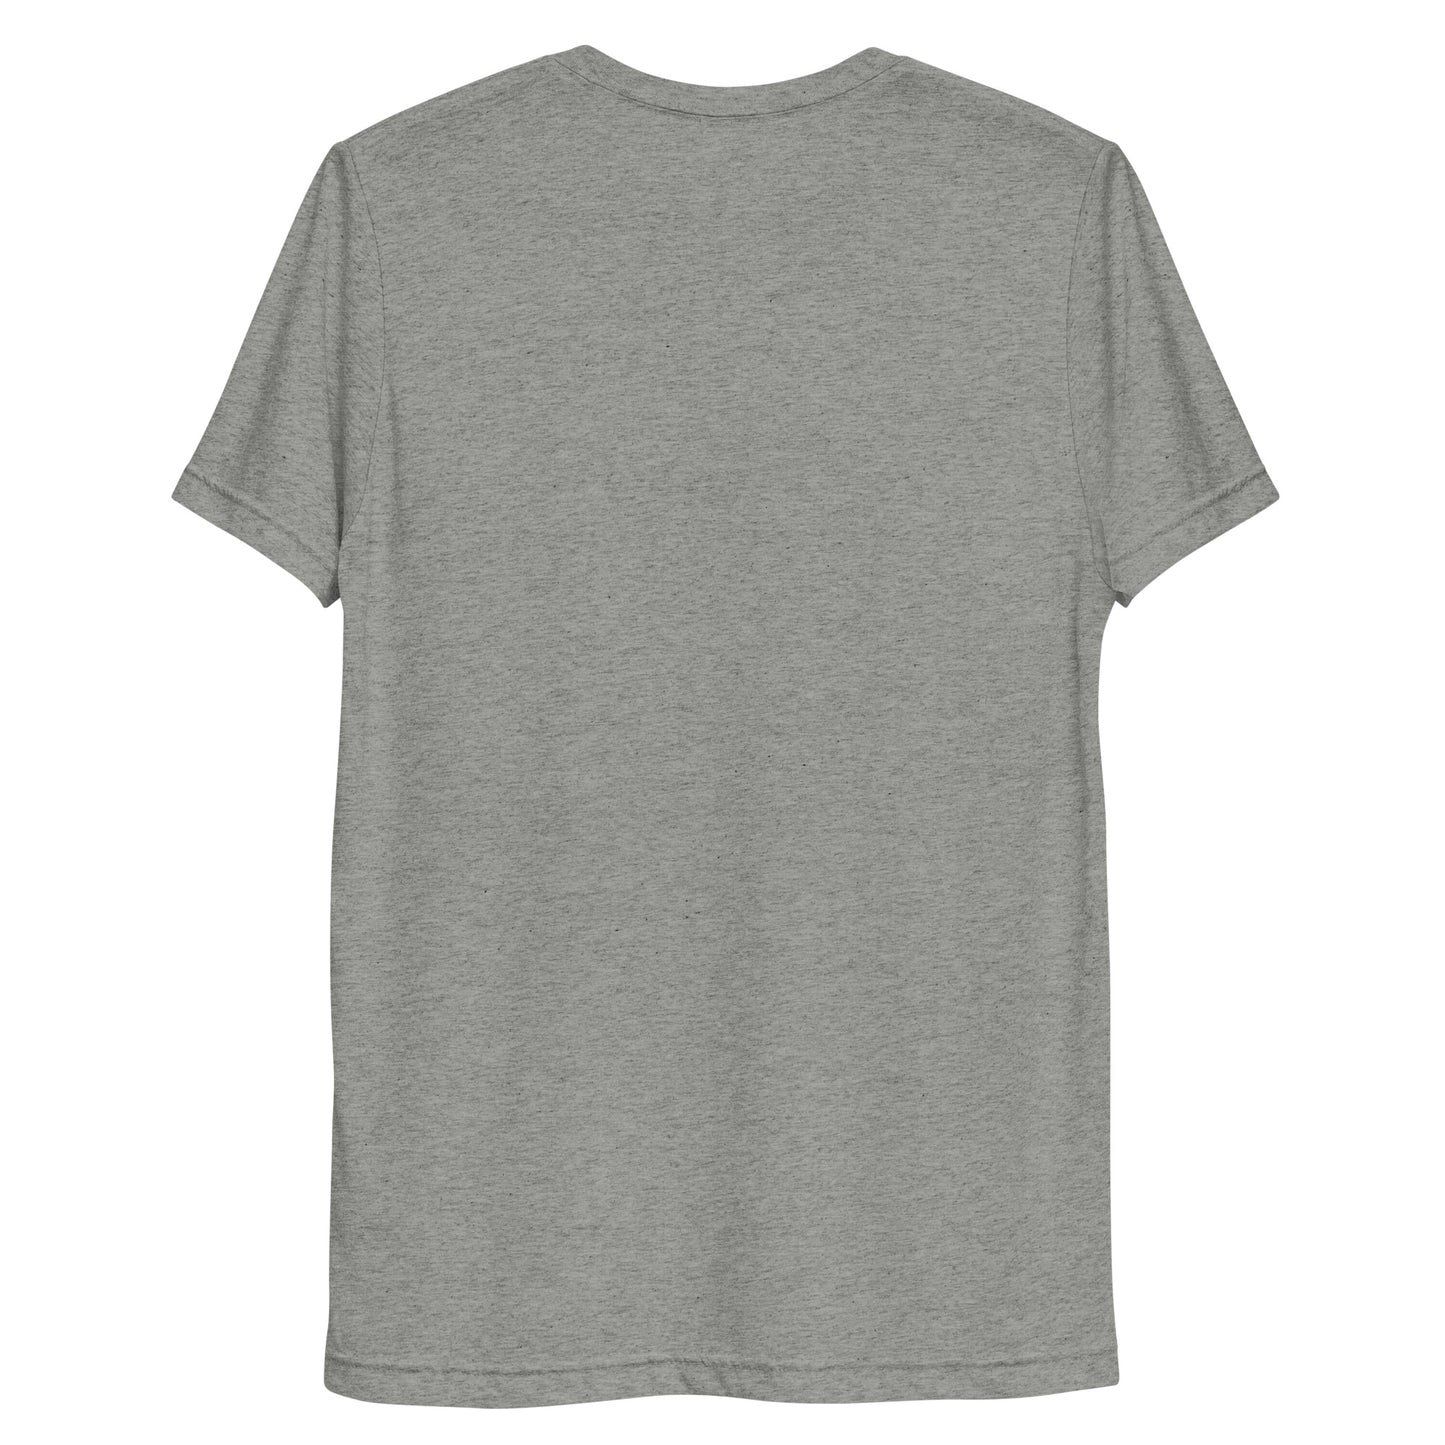 HODAHnites Short Sleeve T-shirt